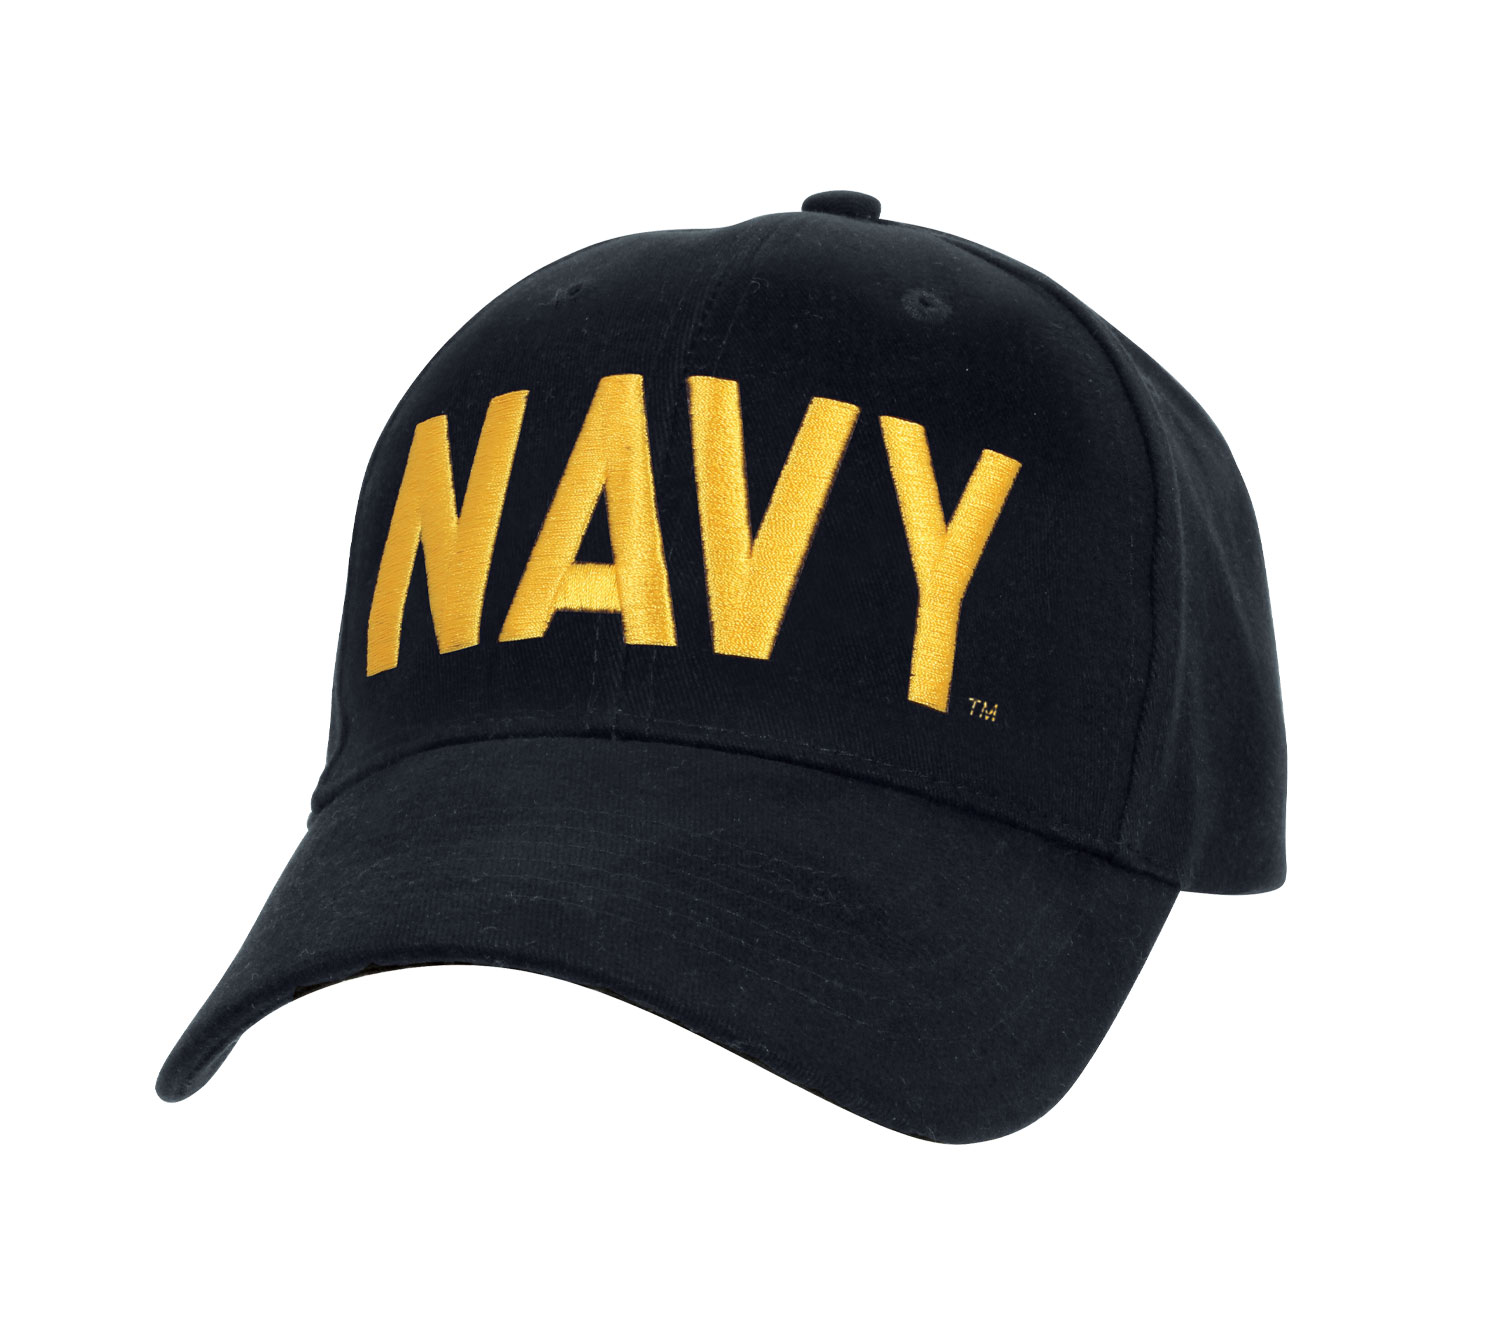 Rothco Navy Low Profile Insignia Cap